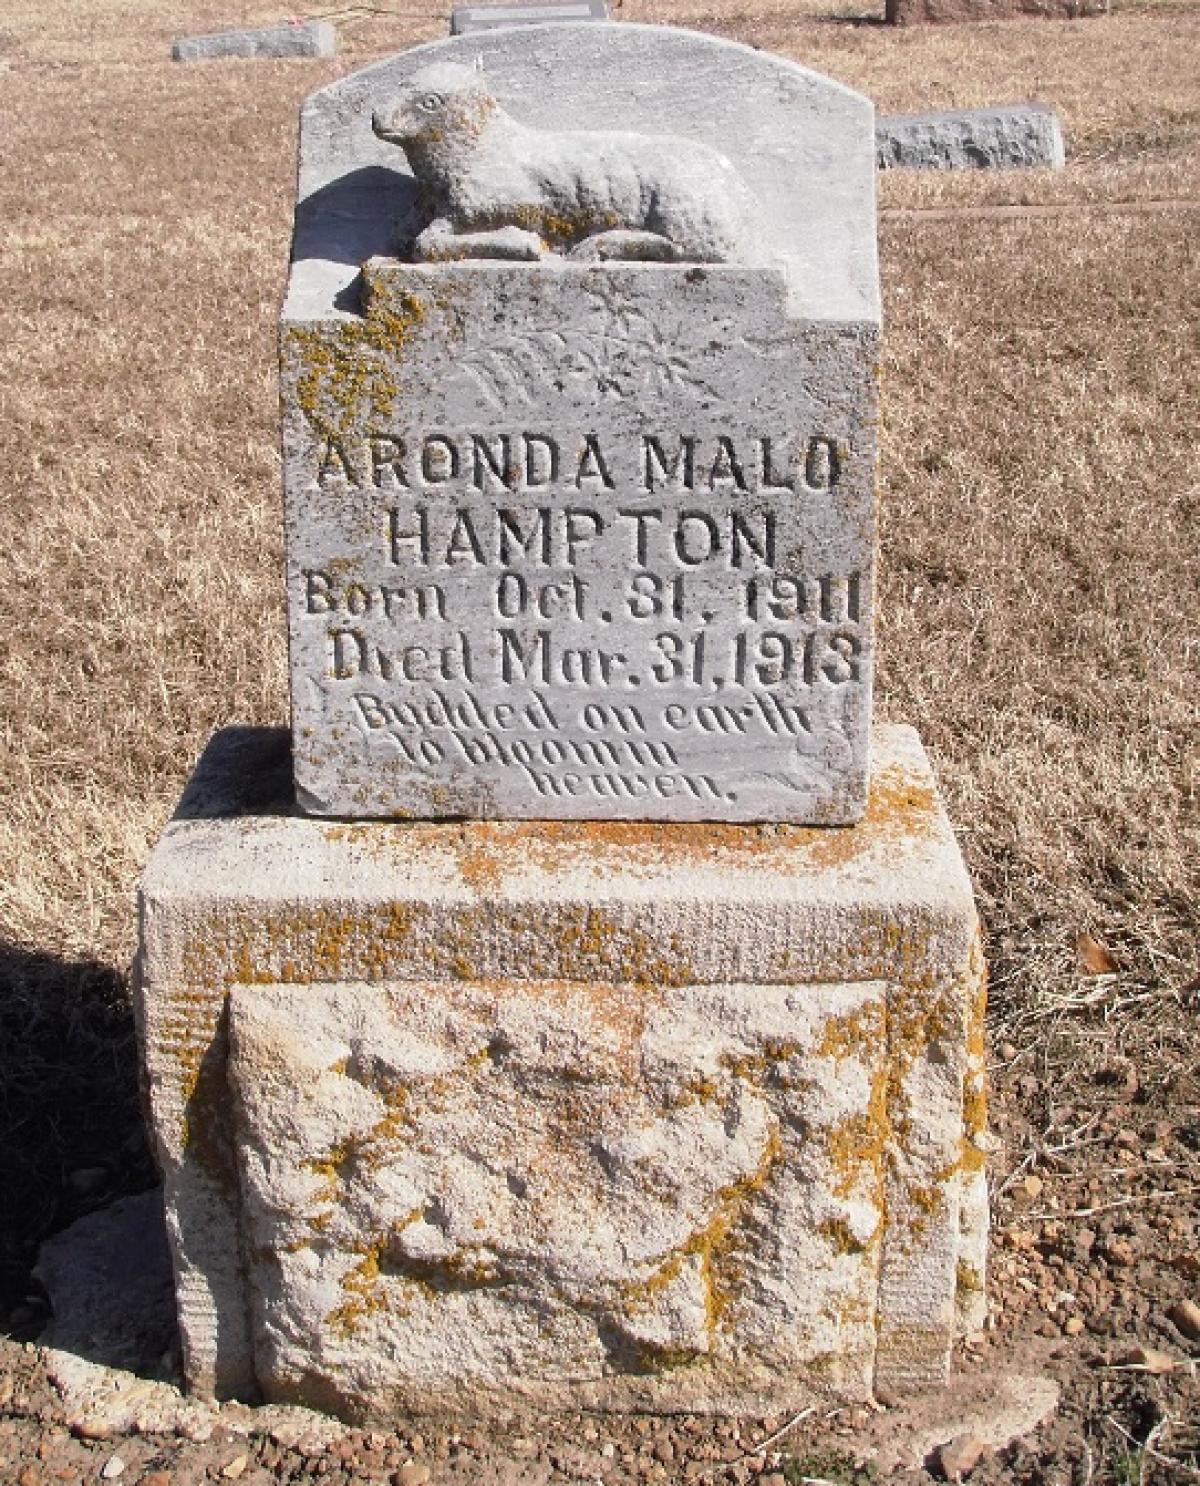 OK, Grove, Olympus Cemetery, Headstone, Hampton, Aronda Malo 